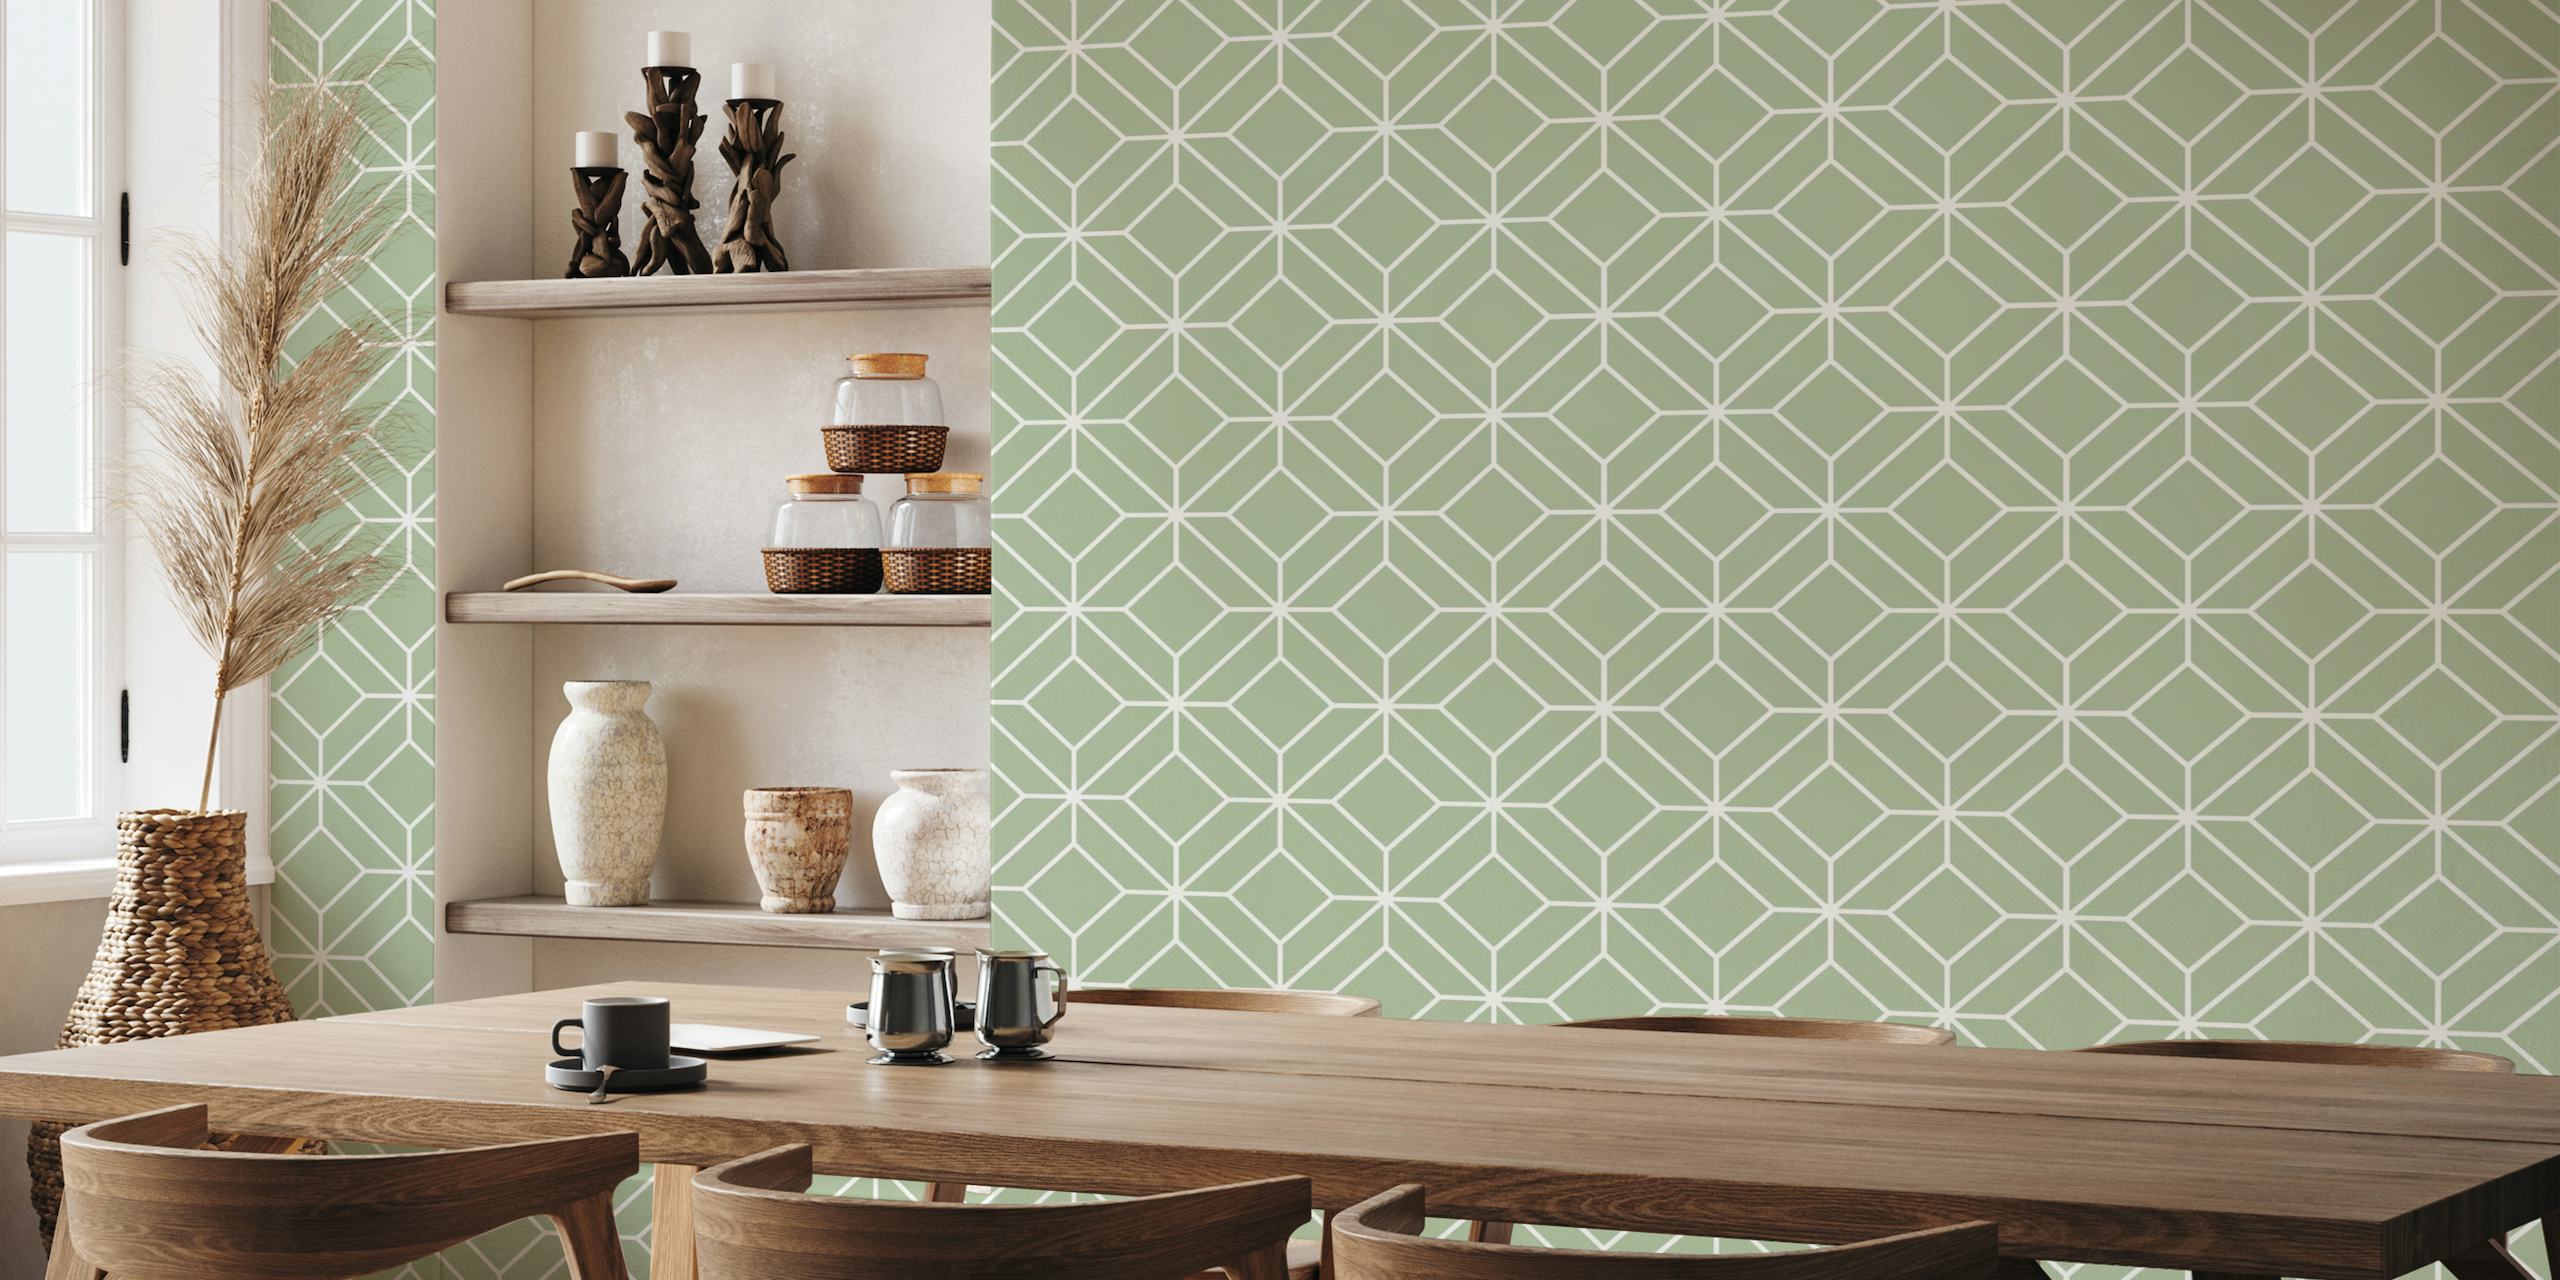 Victor Diamond Tiles - White on Sage Green wallpaper